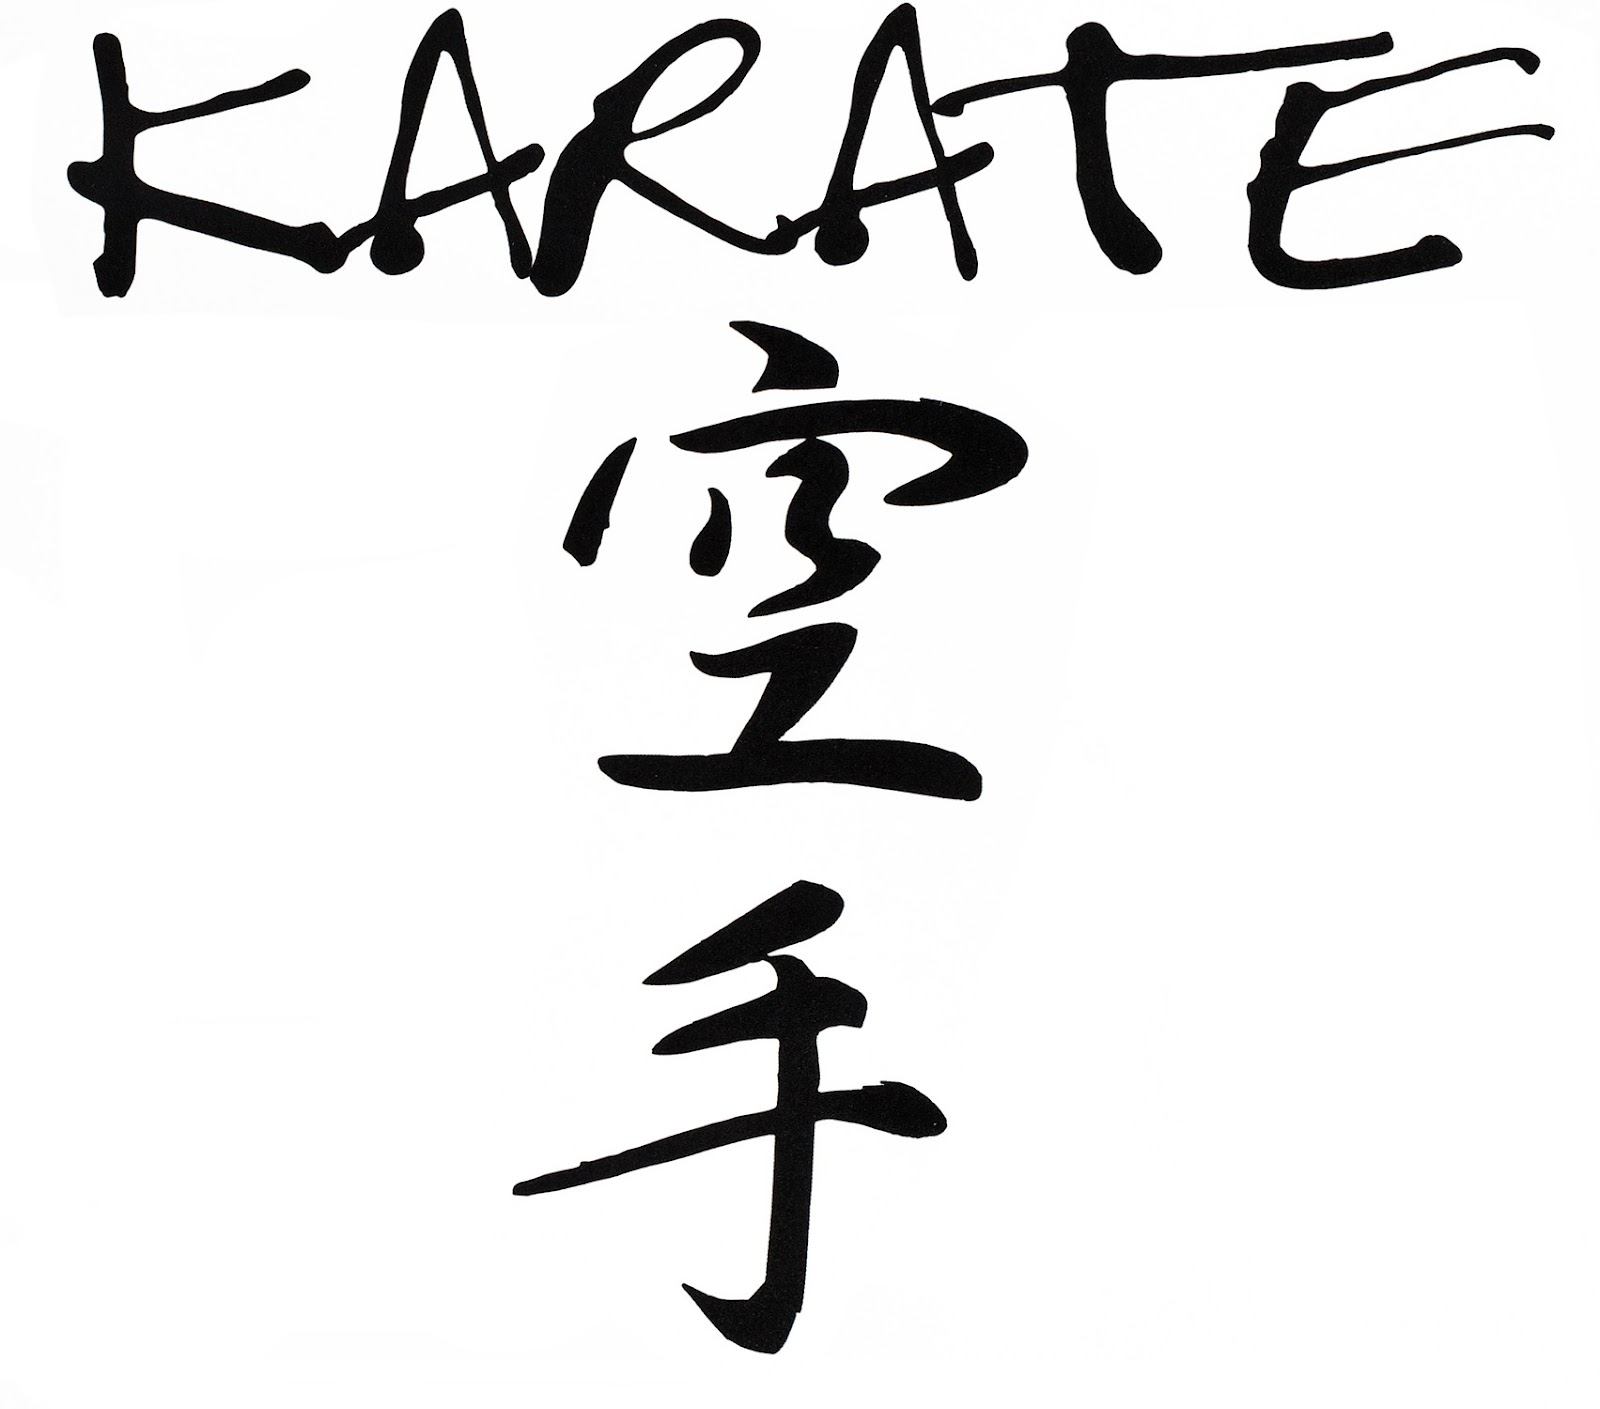 Karate (Concept) - Giant Bomb